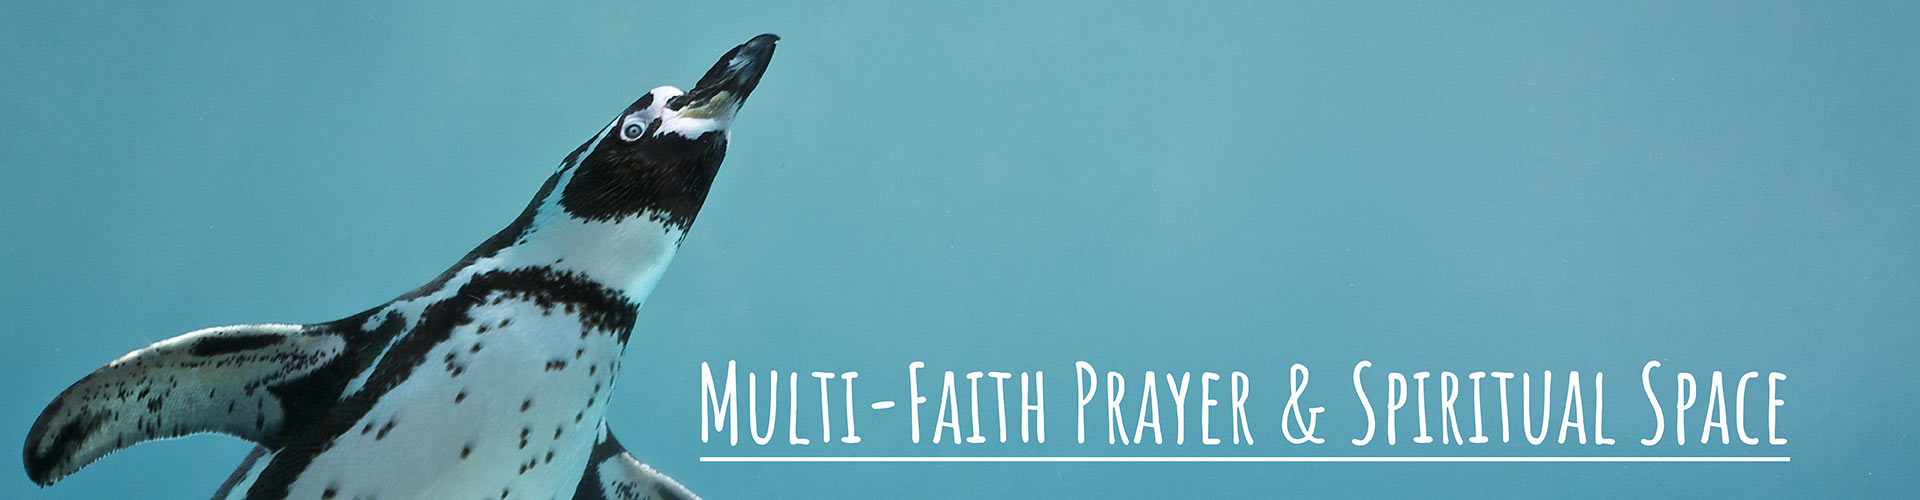 Multi-Faith Prayer & Spiritual Space